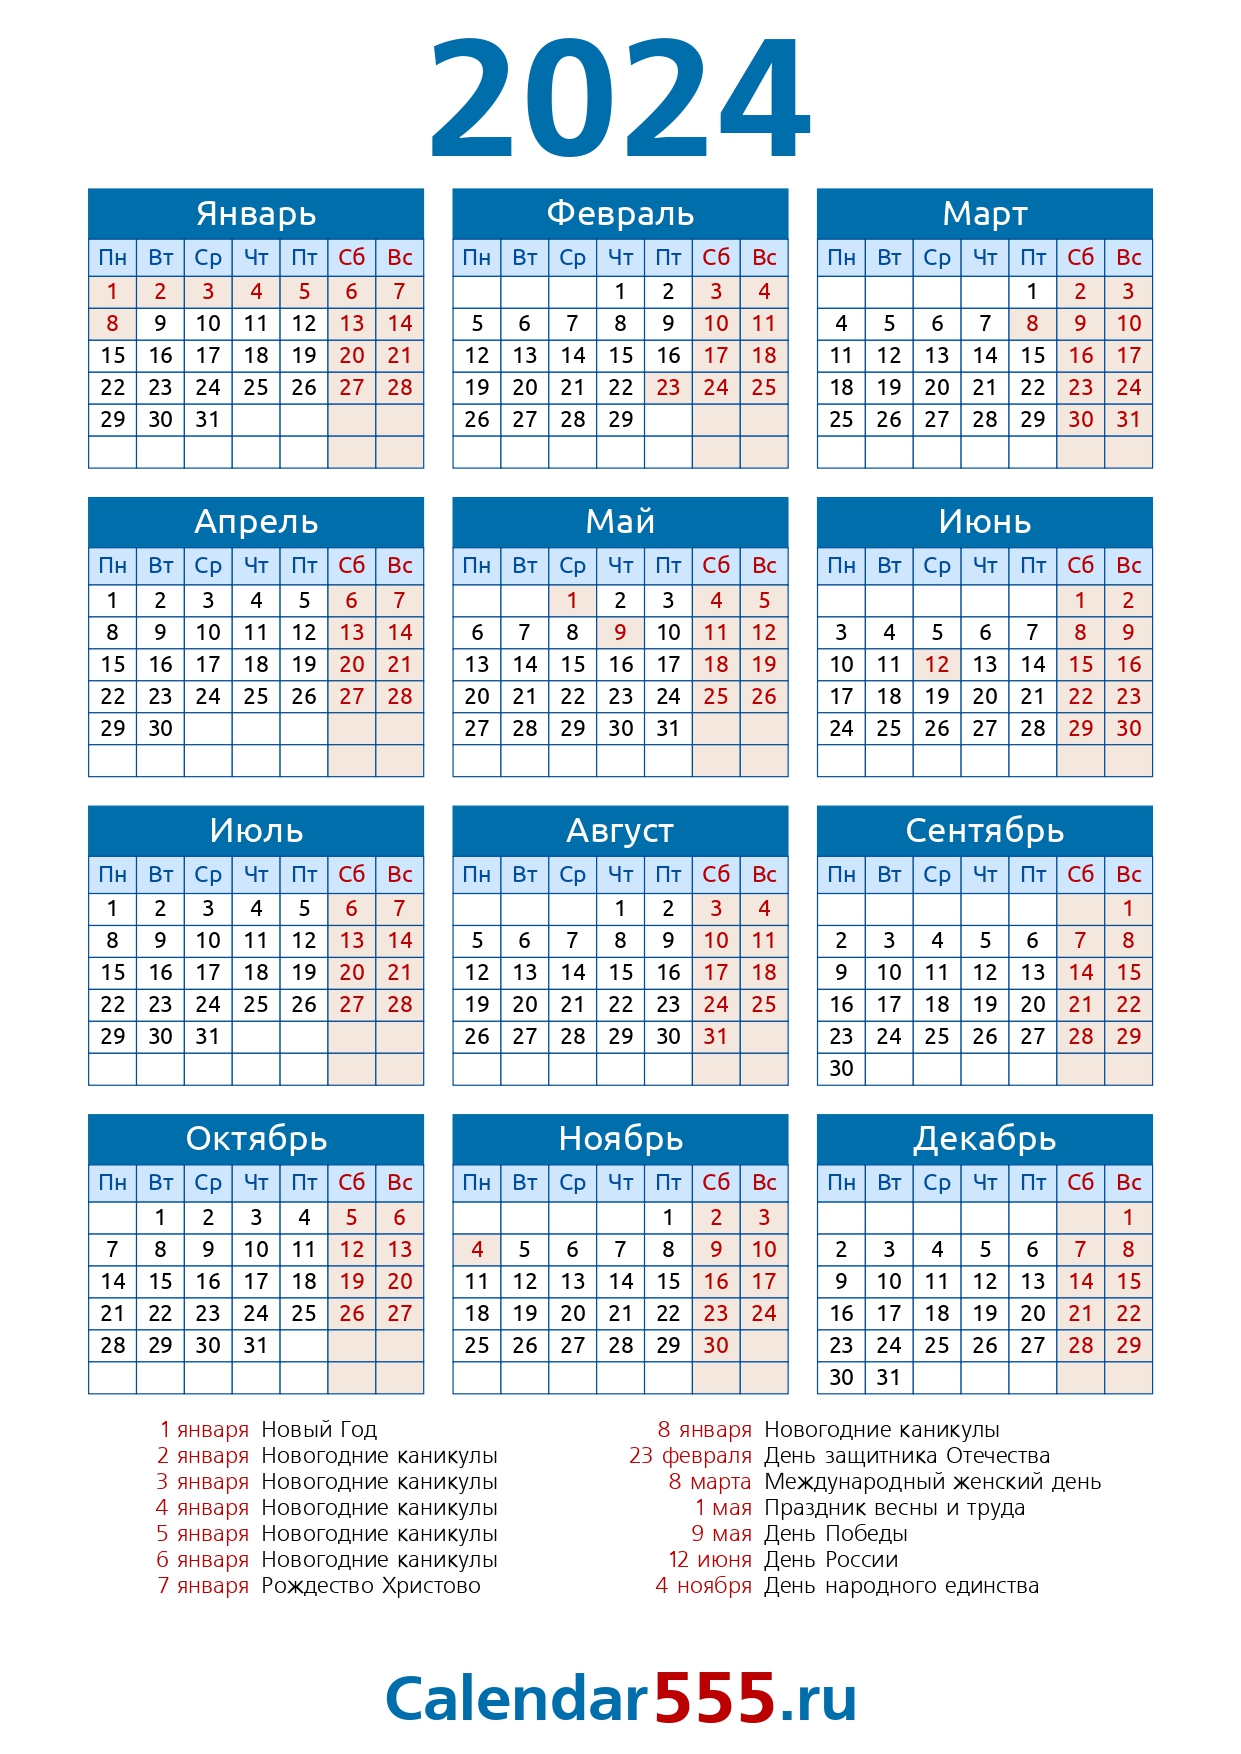 Рабочие дни в 2023 производственный. Производственный 2023 календарь с праздниками на 2023. Производственный календарь на 2023 год. Производство календарь на 2023. Календарь на 2023 год с праздниками.